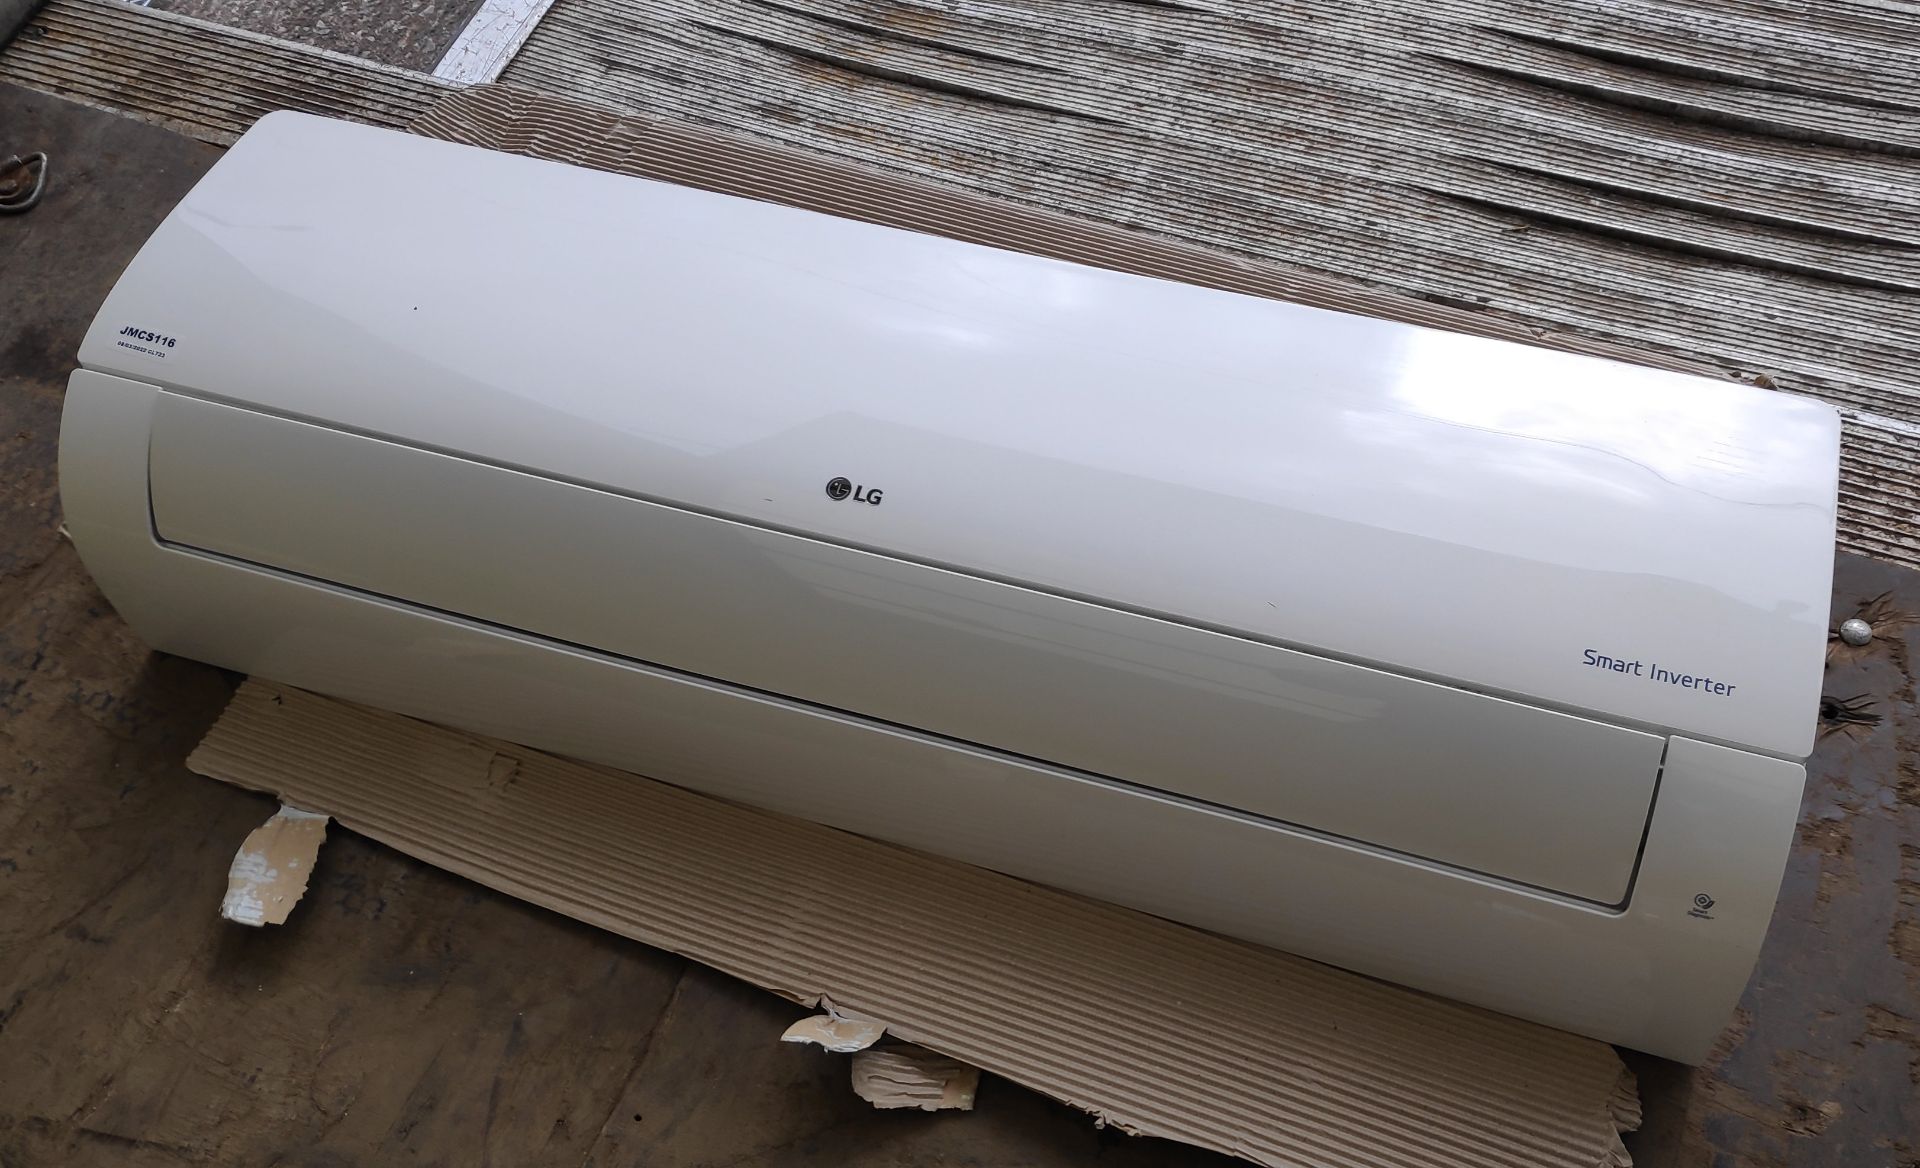 1 x LG Wall Mounted Air Conditioner Smart Inverter Indoor Unit - Model P18EN.NSK - JMCS116 - - Image 2 of 10